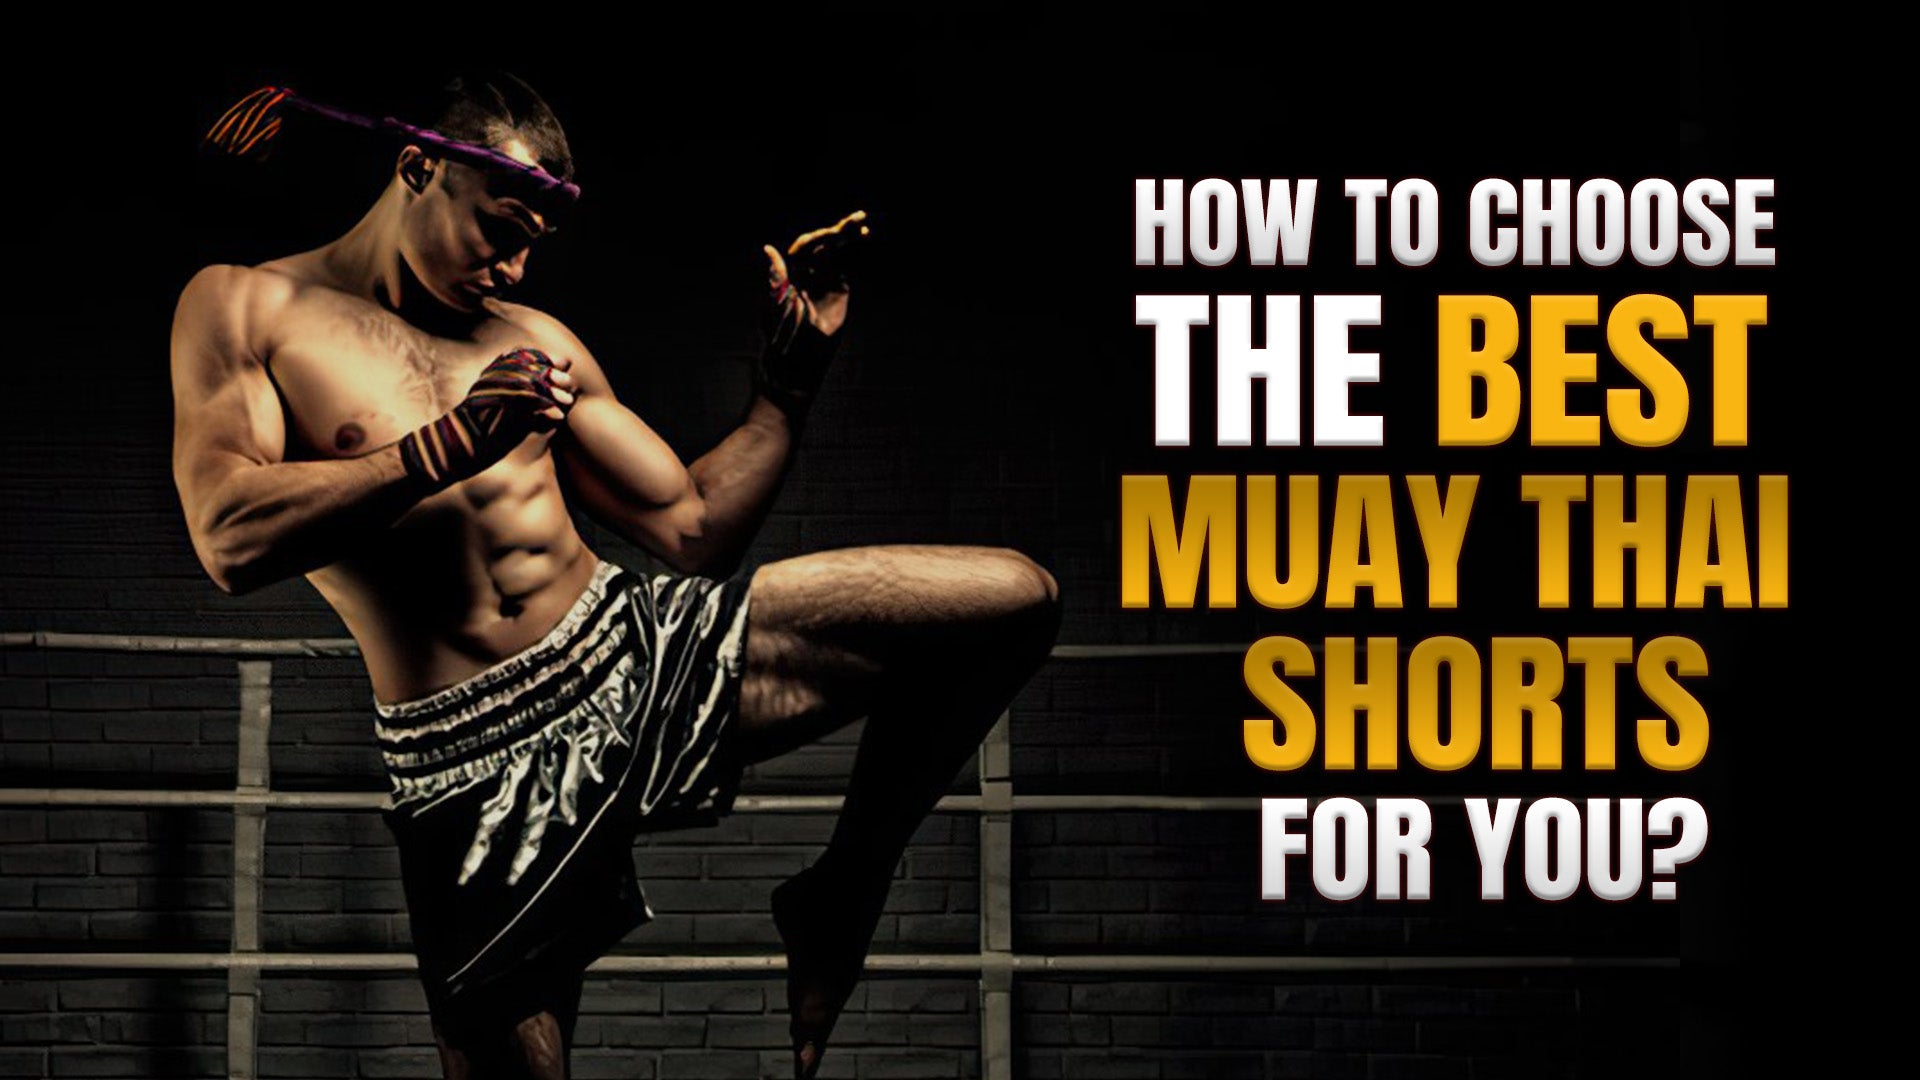 III. Factors to Consider When Choosing Muay Thai Shorts